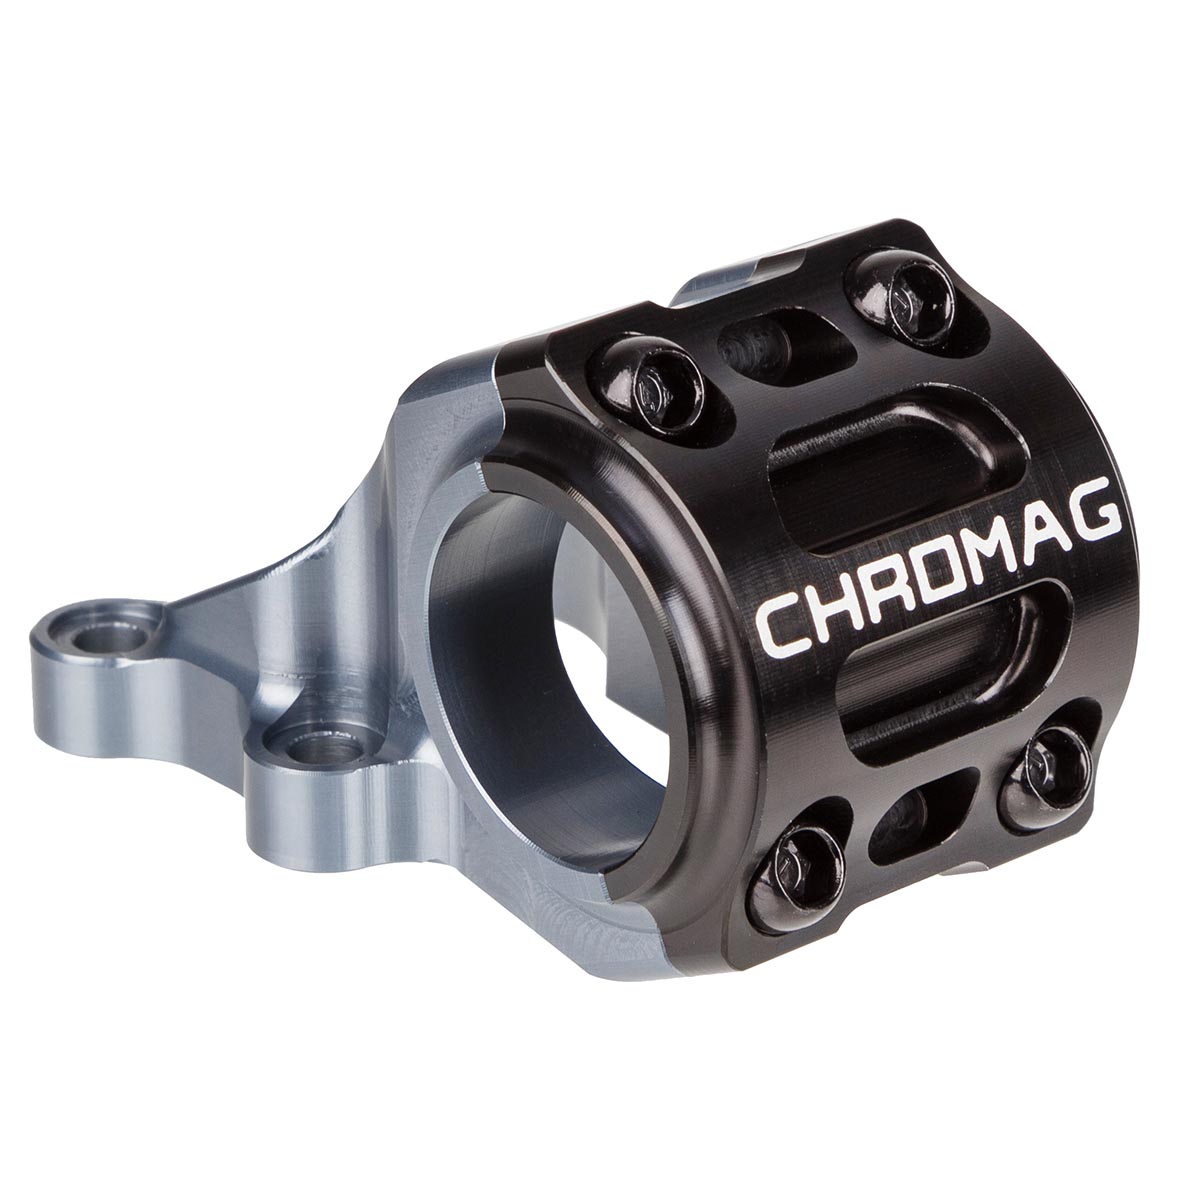 Chromag MTB Stem Director Direct Mount 31.8 mm, 47 mm Reach, Pewter